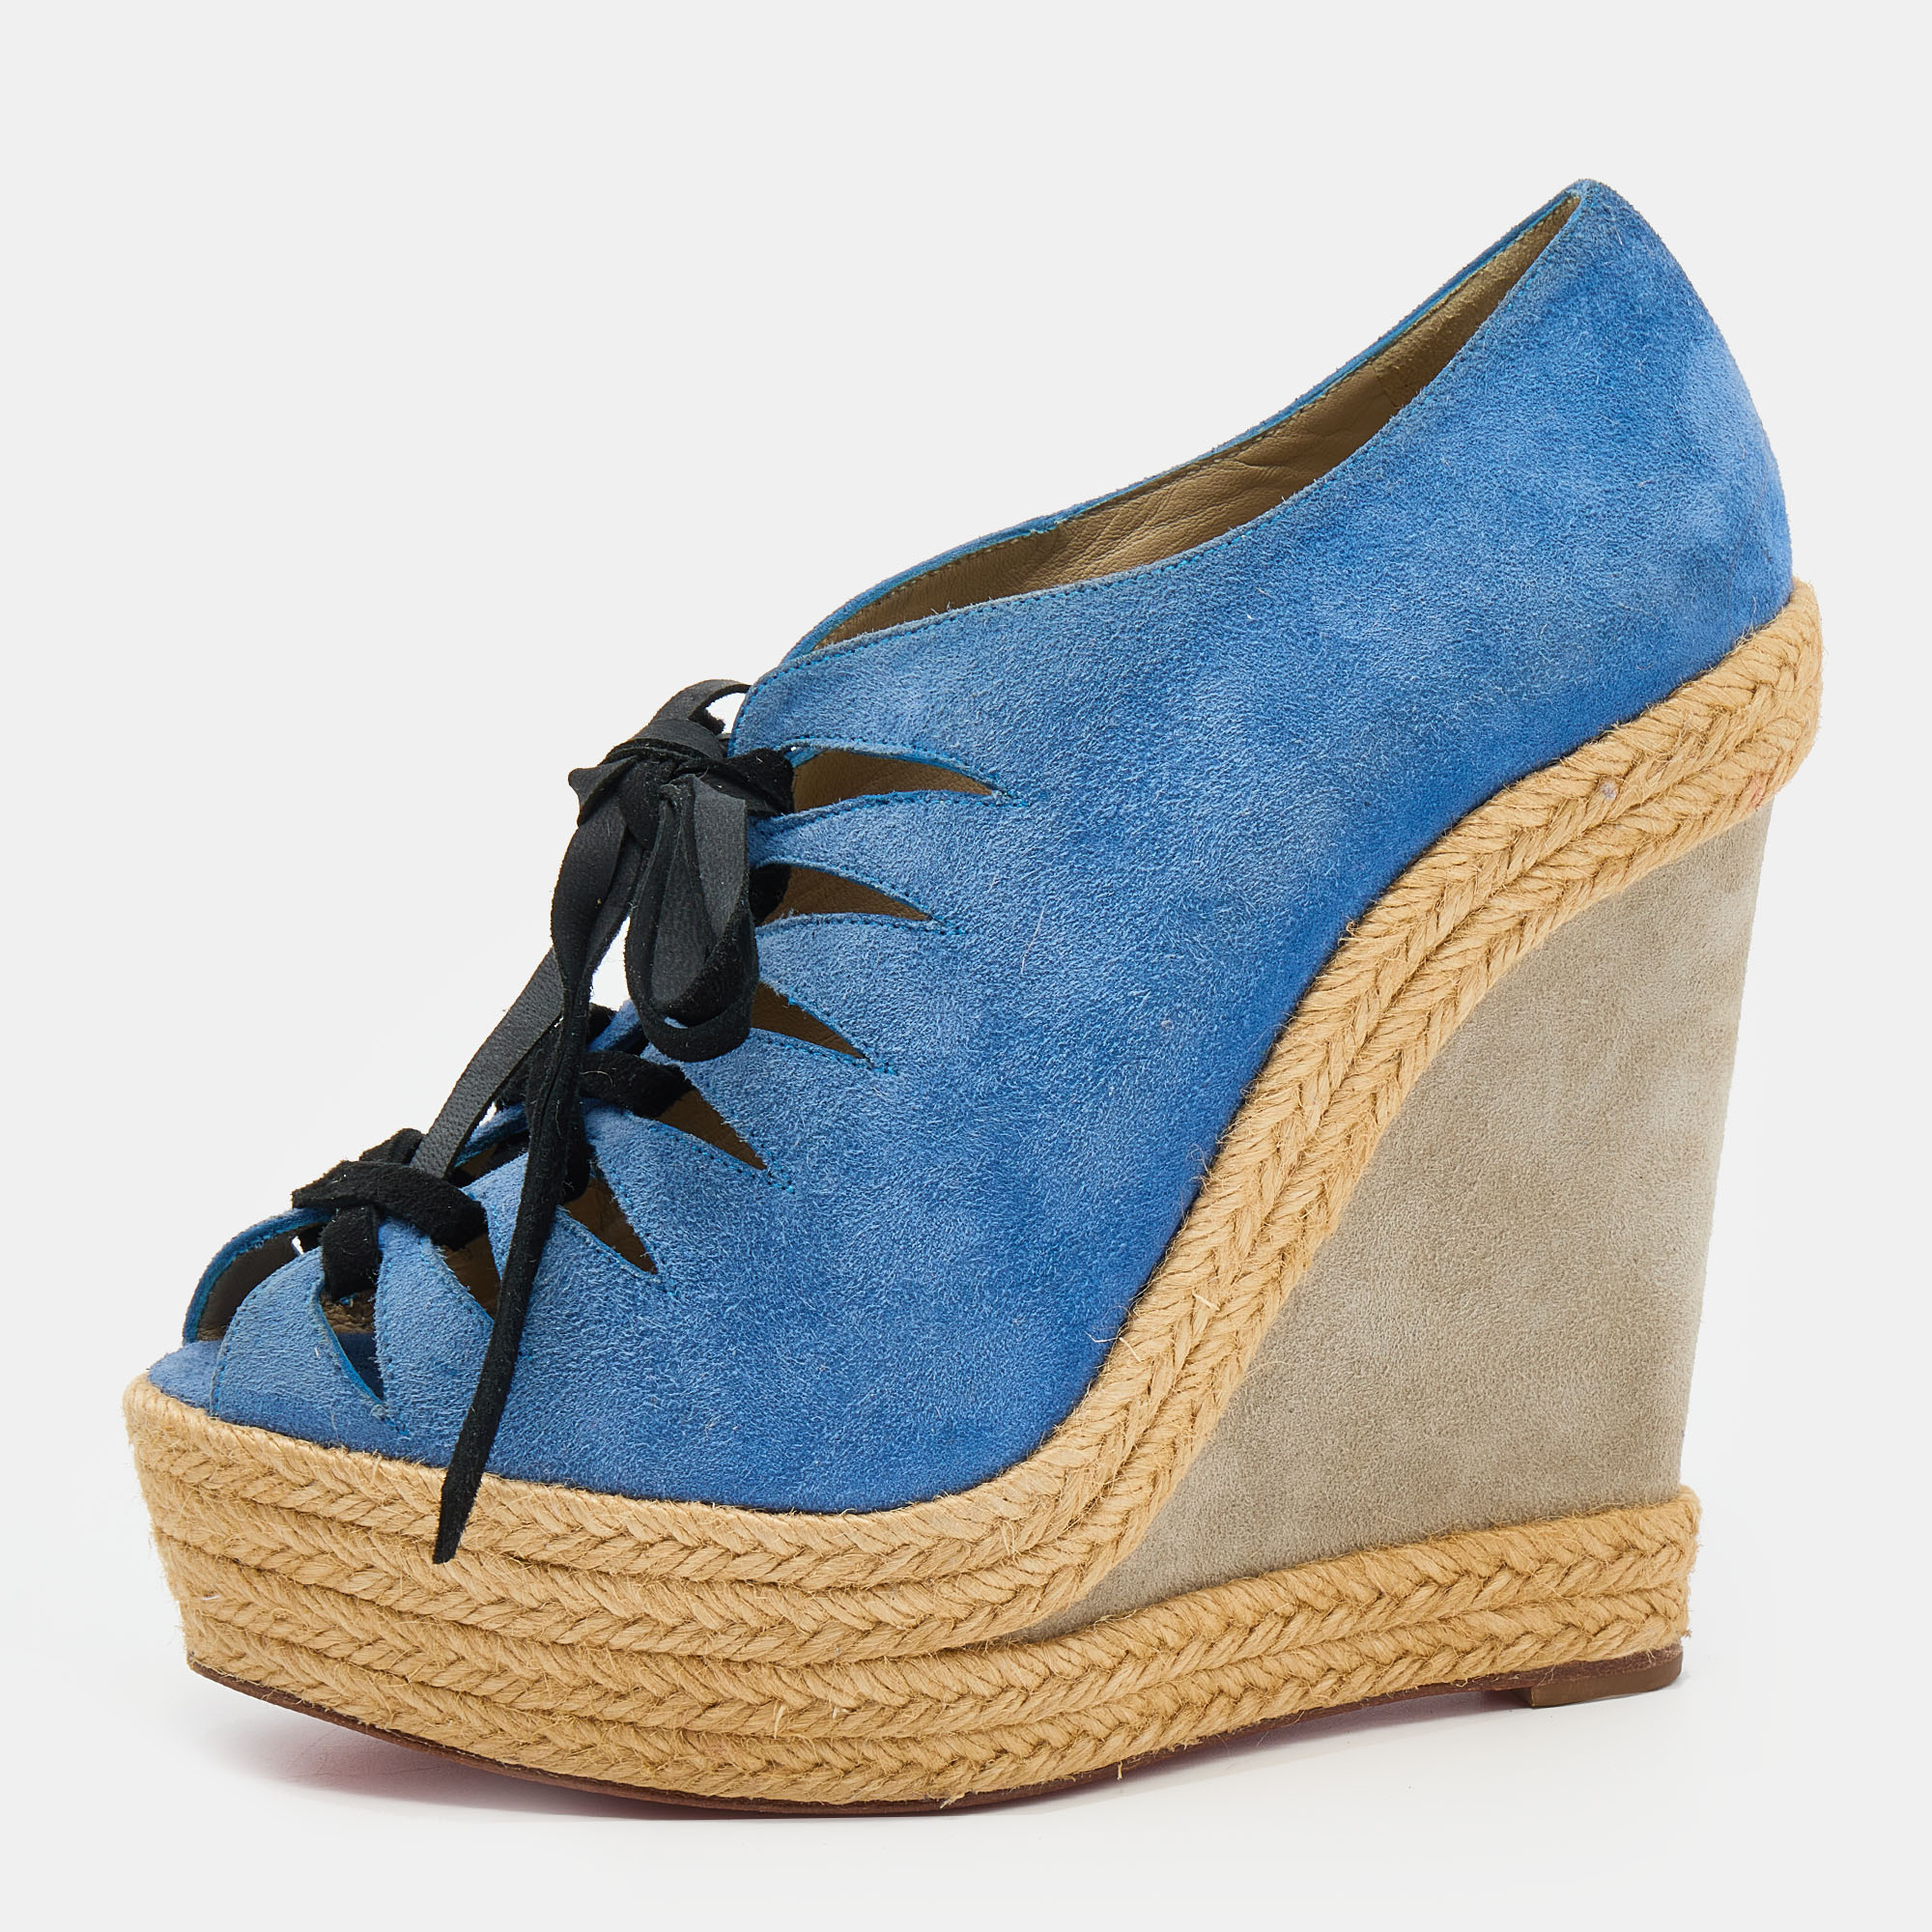 Christian louboutin blue/grey suede lace up espadrille platform wedge sandals size 37